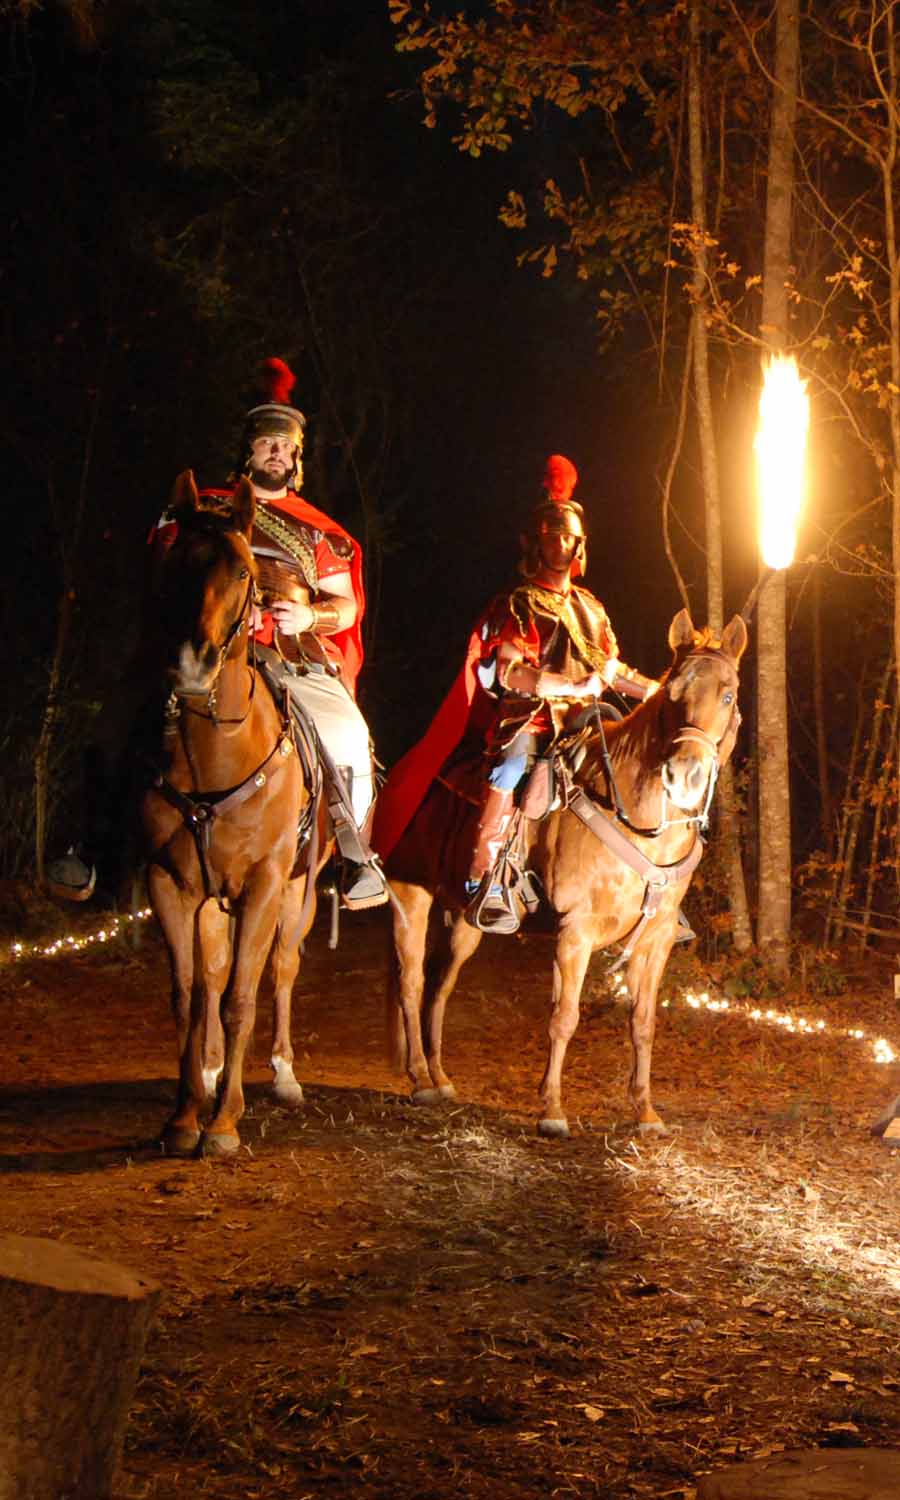 Roman soldiers on horseback